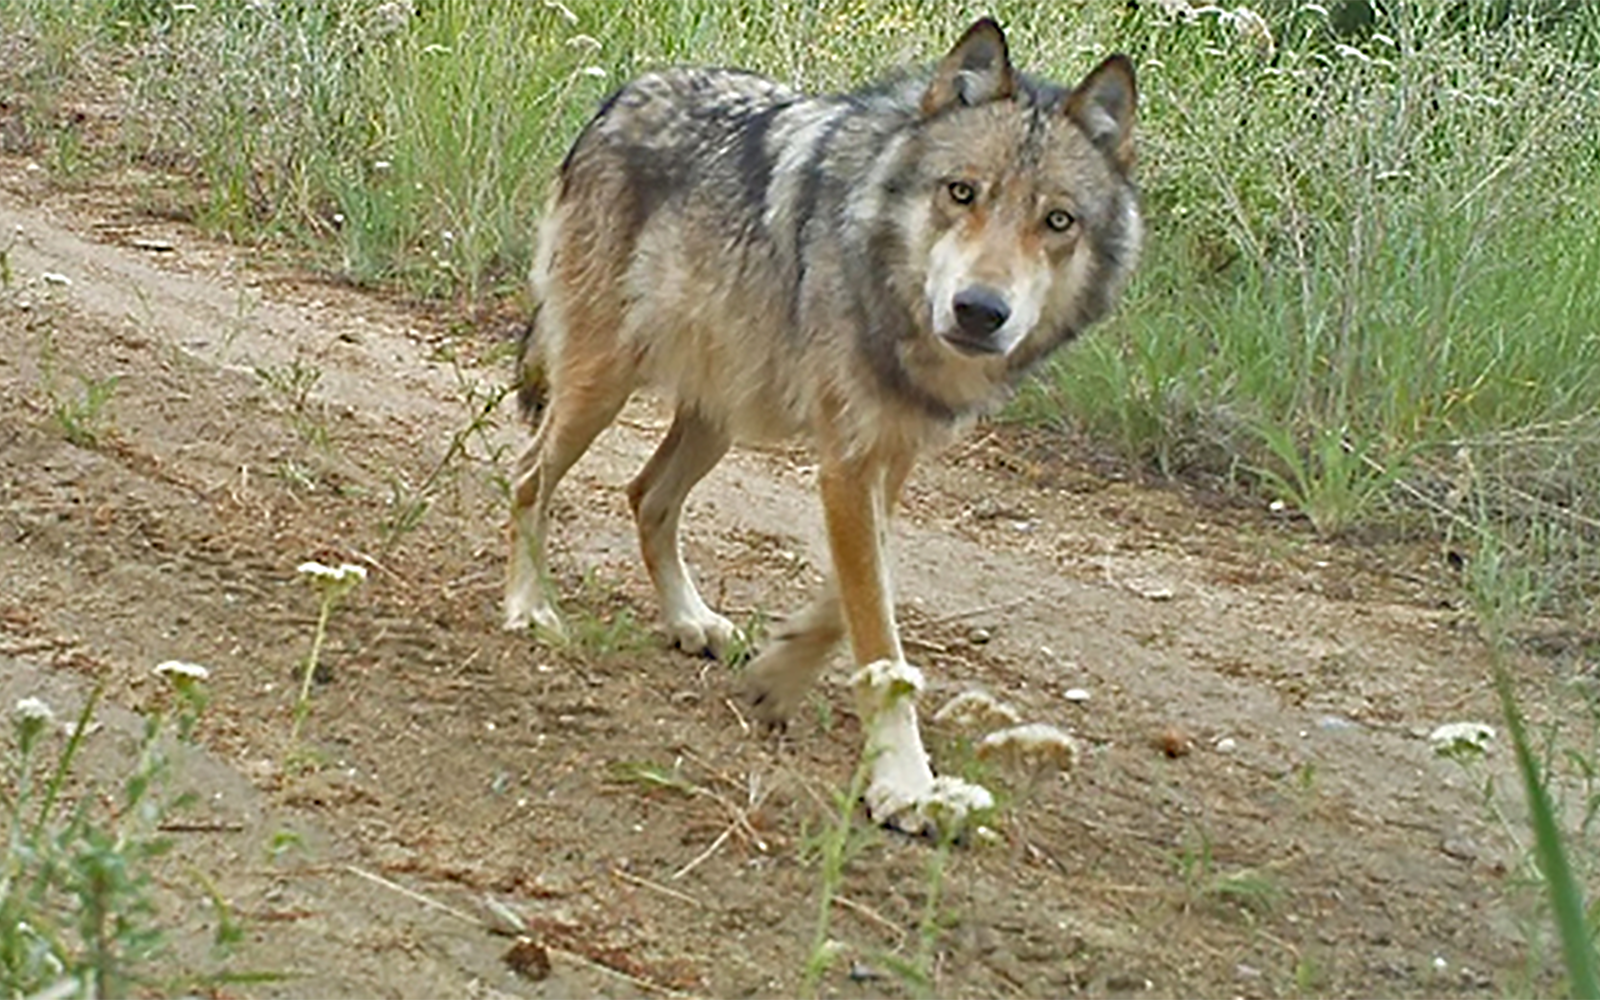 Press Release: Lawsuit Challenges Washington’s Failure to Enact Wolf Management Rules